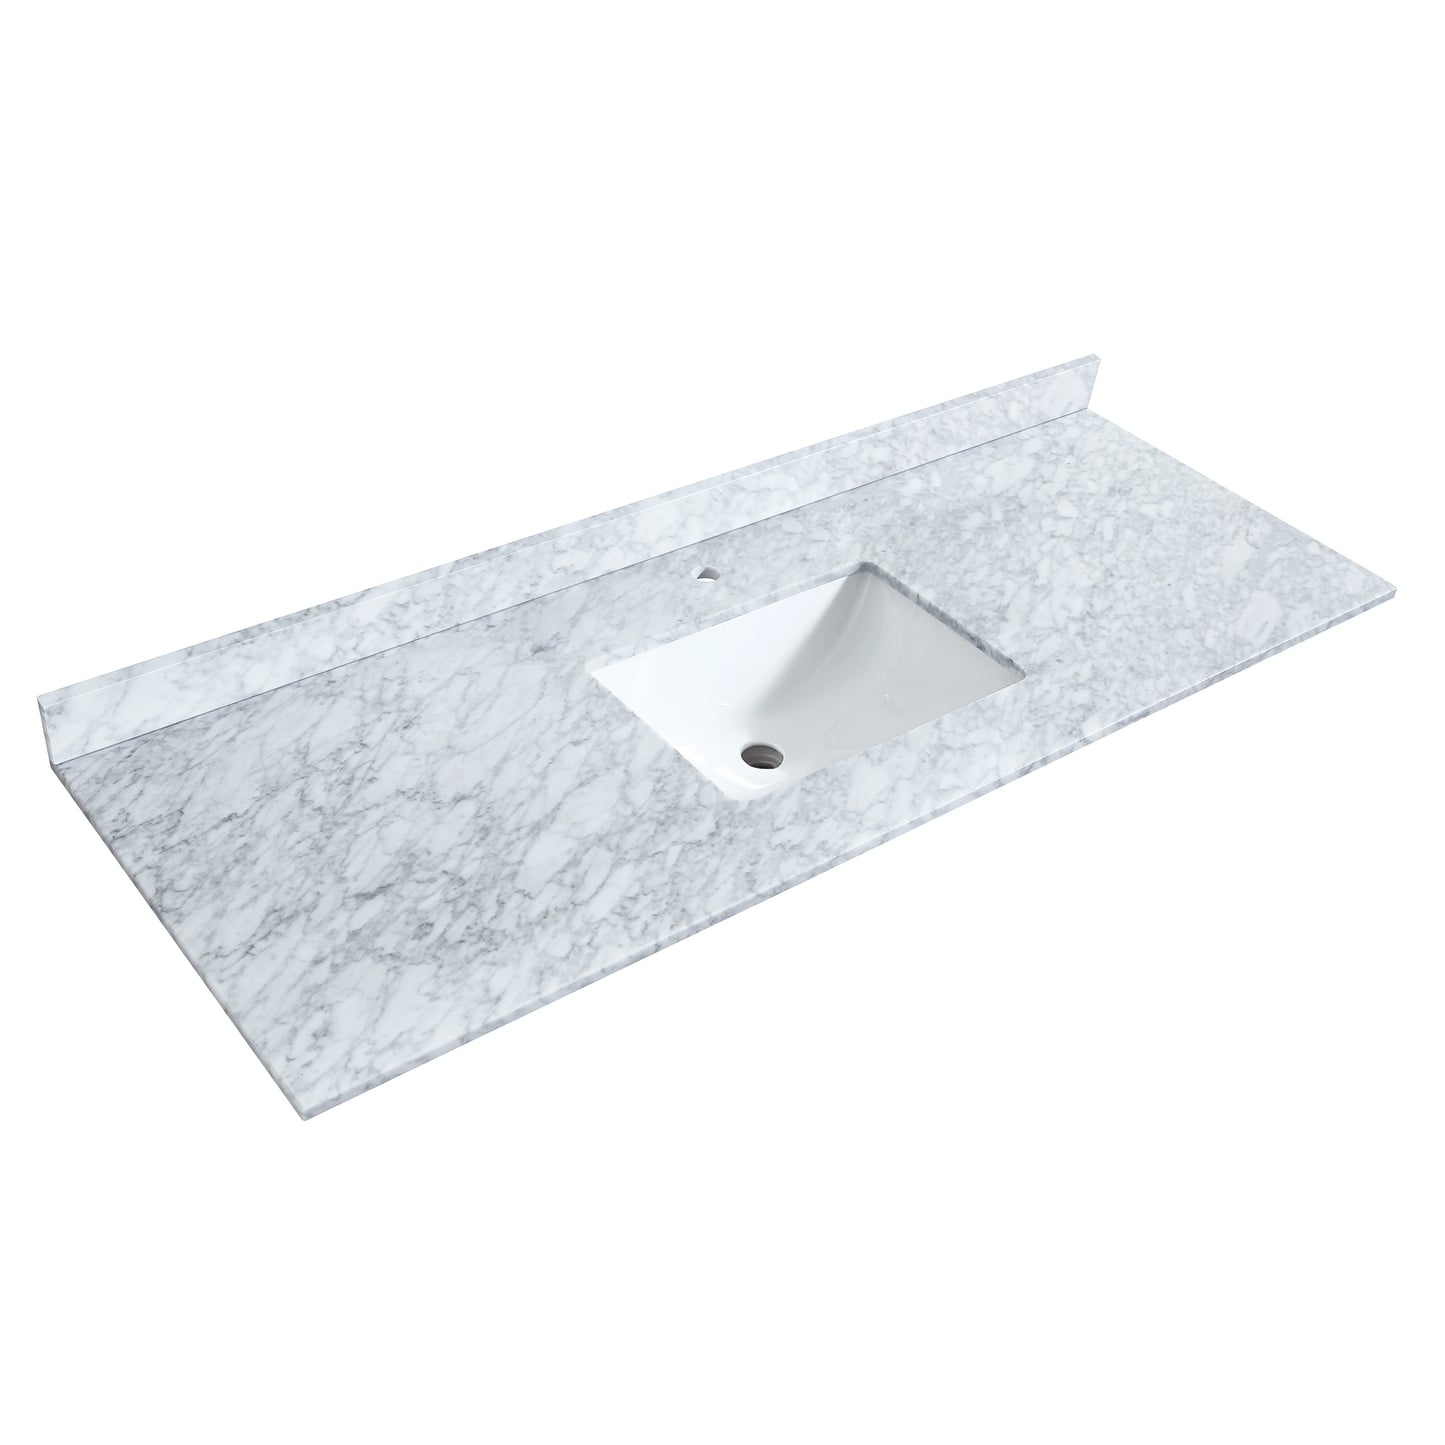 Wyndham Avery 60 Inch Single Bathroom Vanity White Carrara Marble Countertop, Undermount Square Sink in Matte Black Trim with 58 Inch Mirror - Luxe Bathroom Vanities